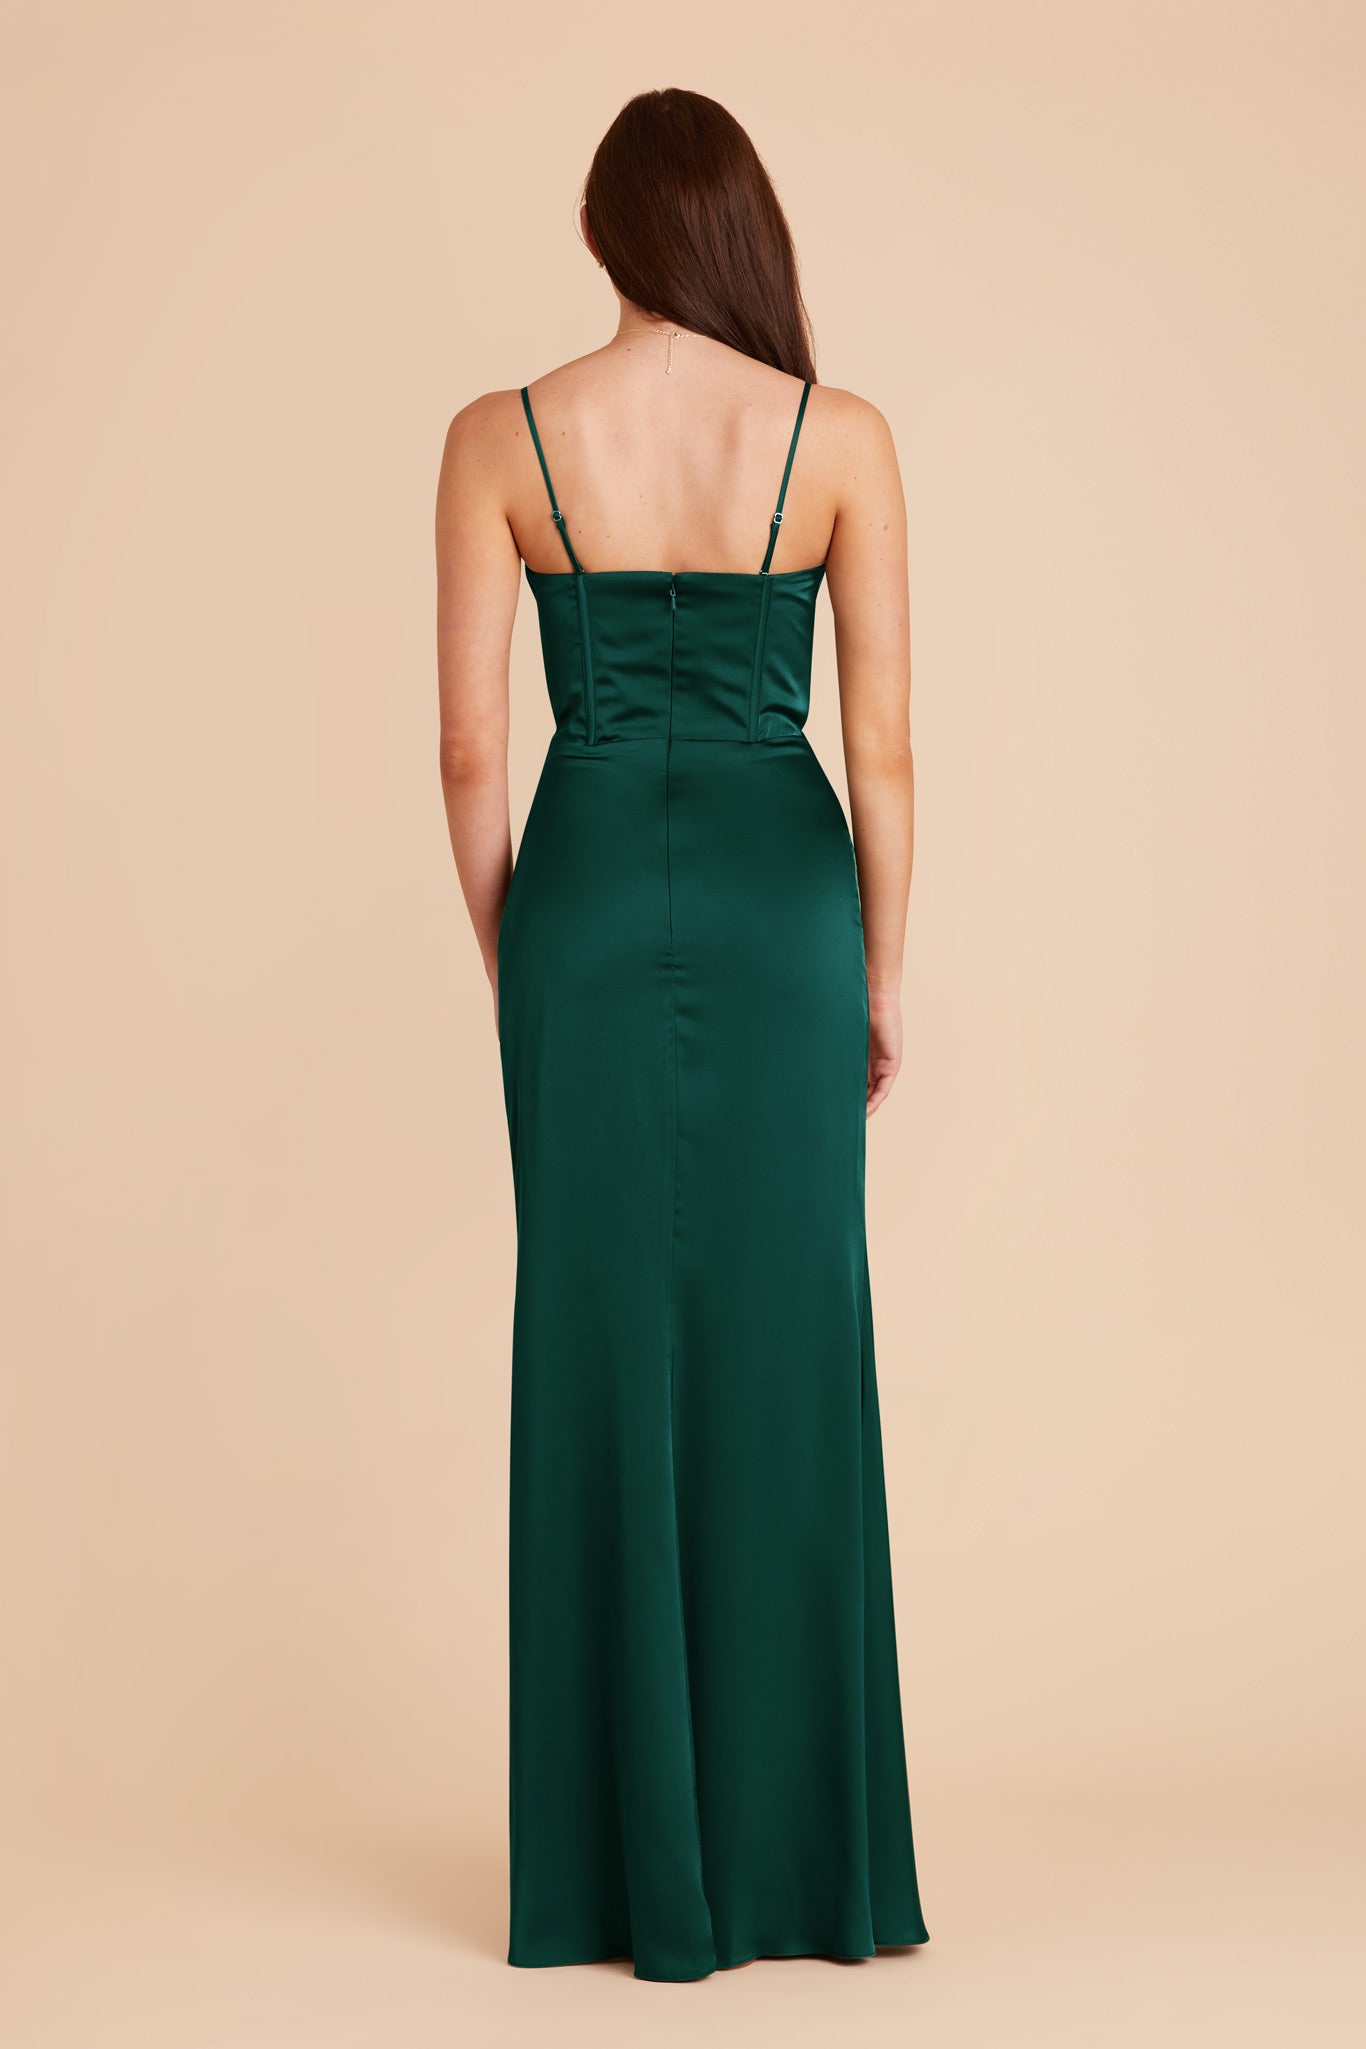 Emerald Carrie Matte Satin Dress by Birdy Grey